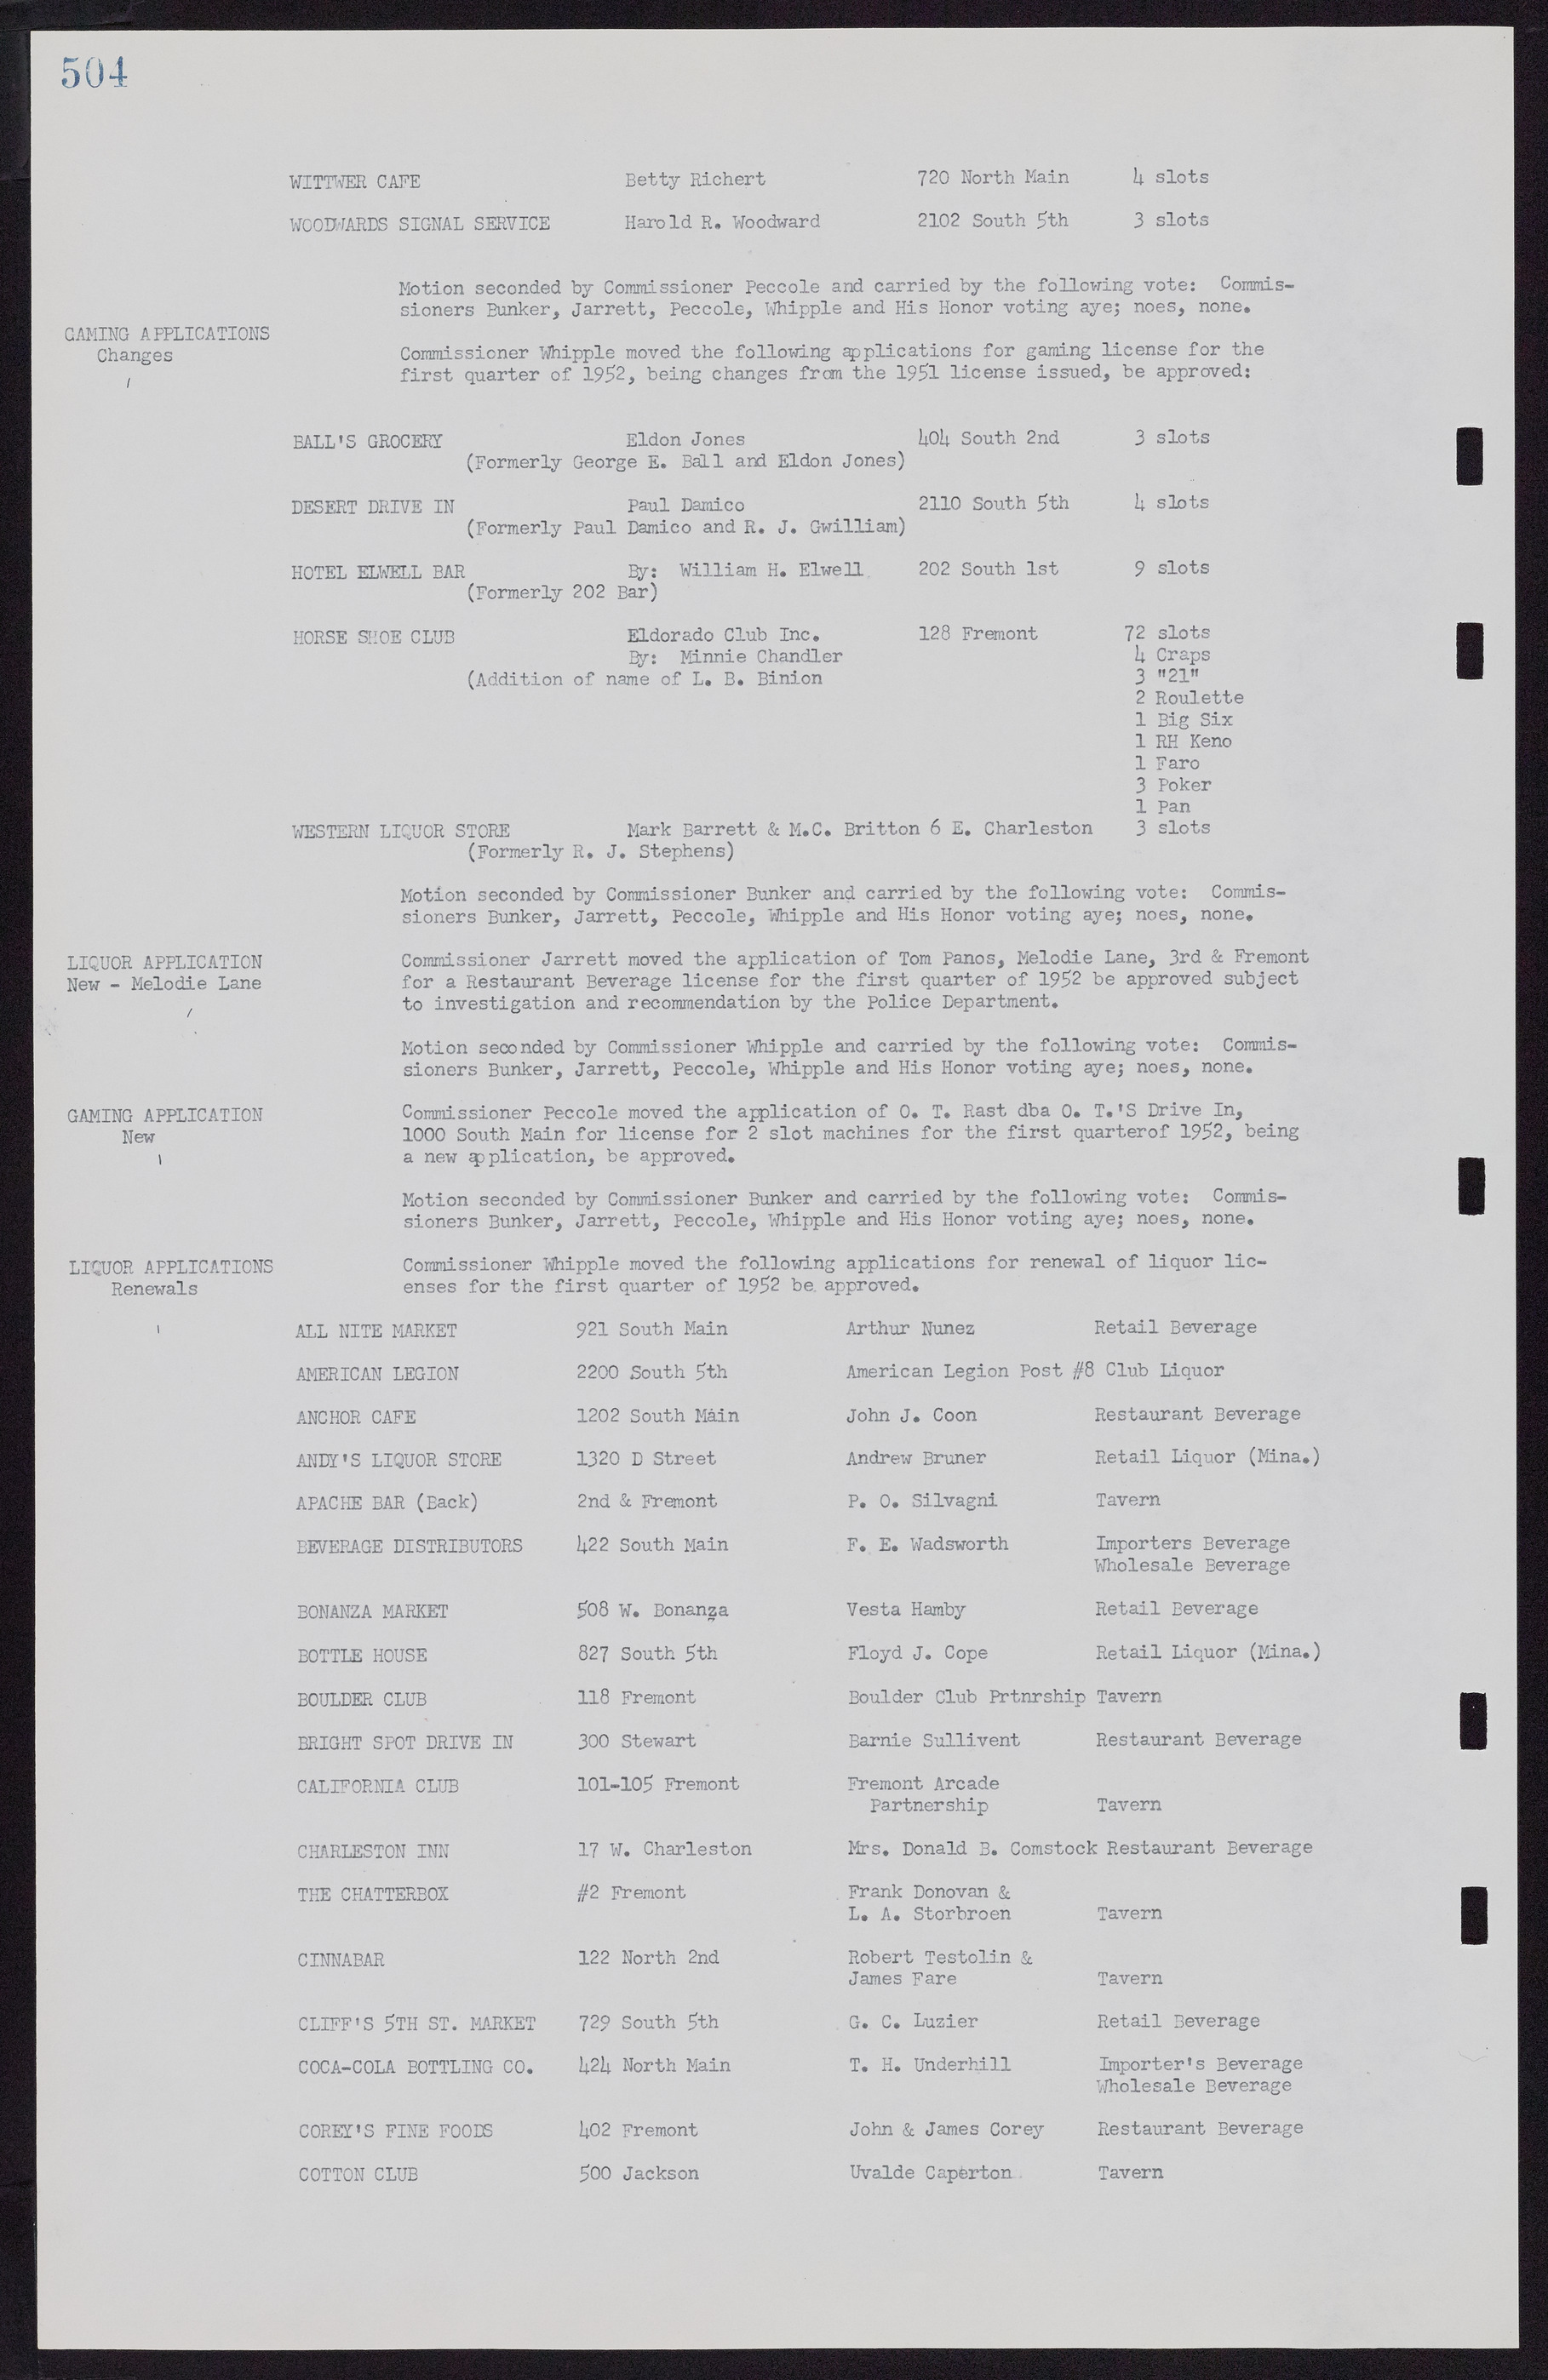 Las Vegas City Commission Minutes, November 7, 1949 to May 21, 1952, lvc000007-520